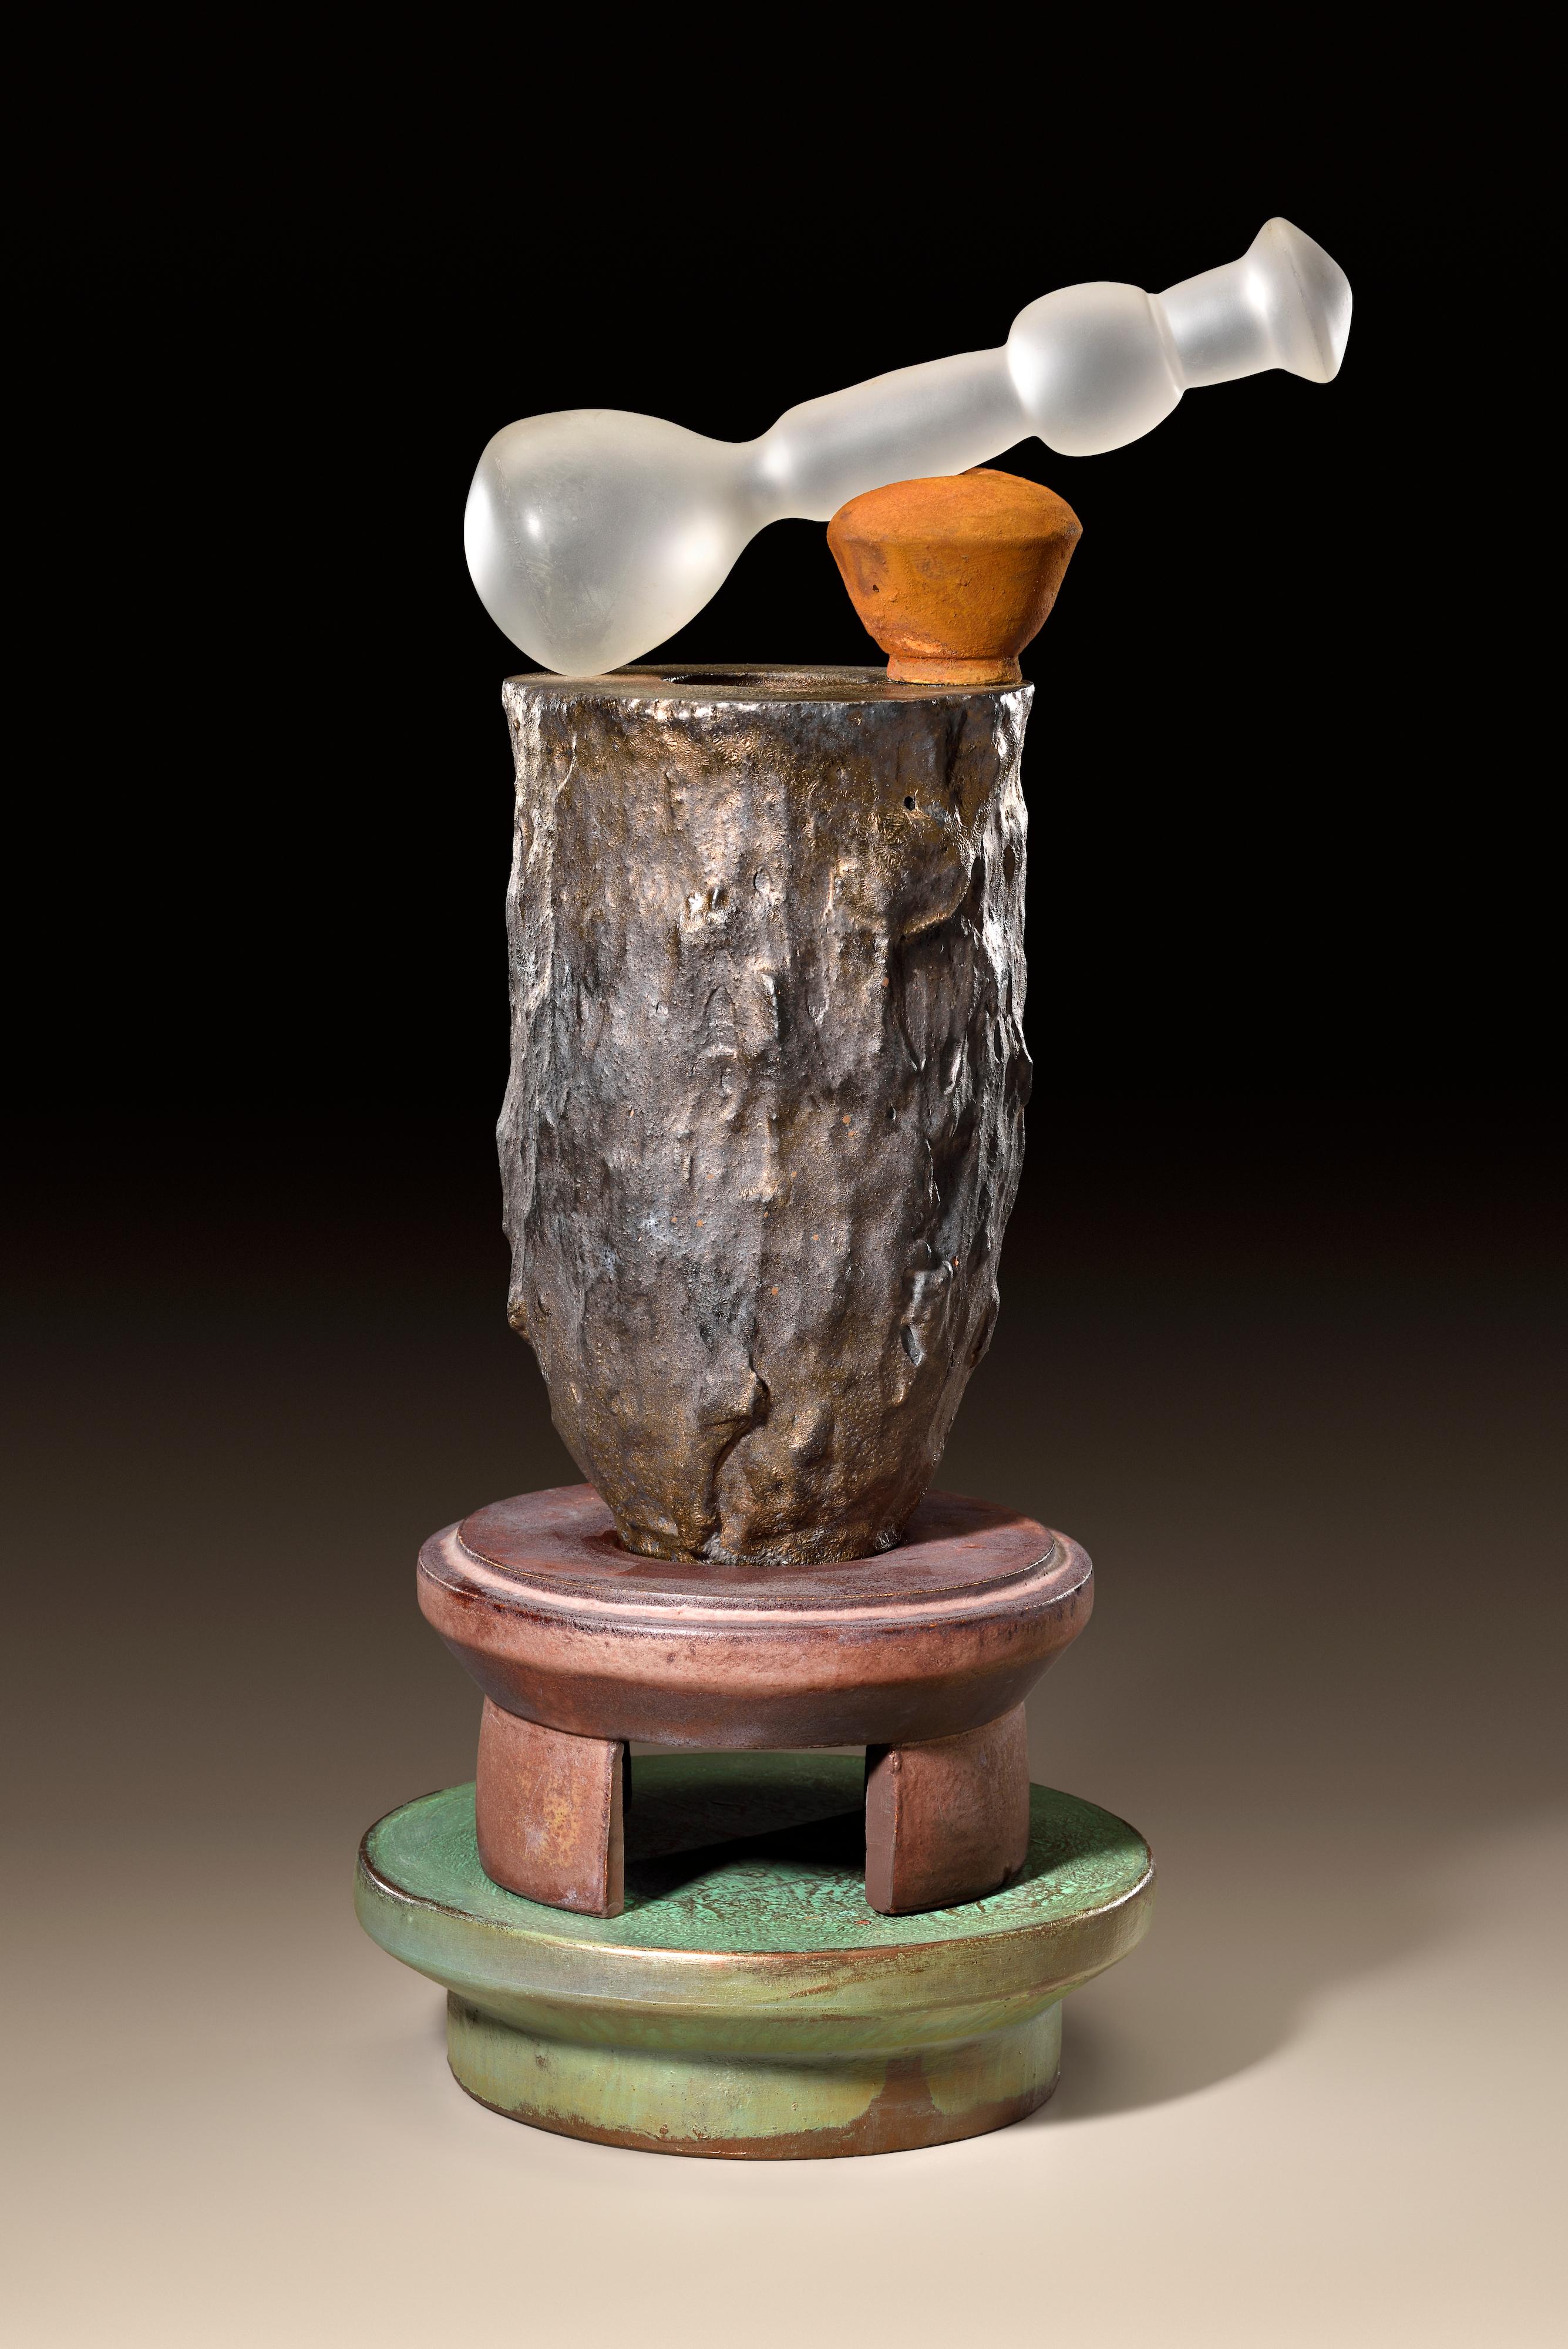 Contemporary Richard Hirsch Glazed Ceramic Crucible Sculpture #50, 2018 For Sale